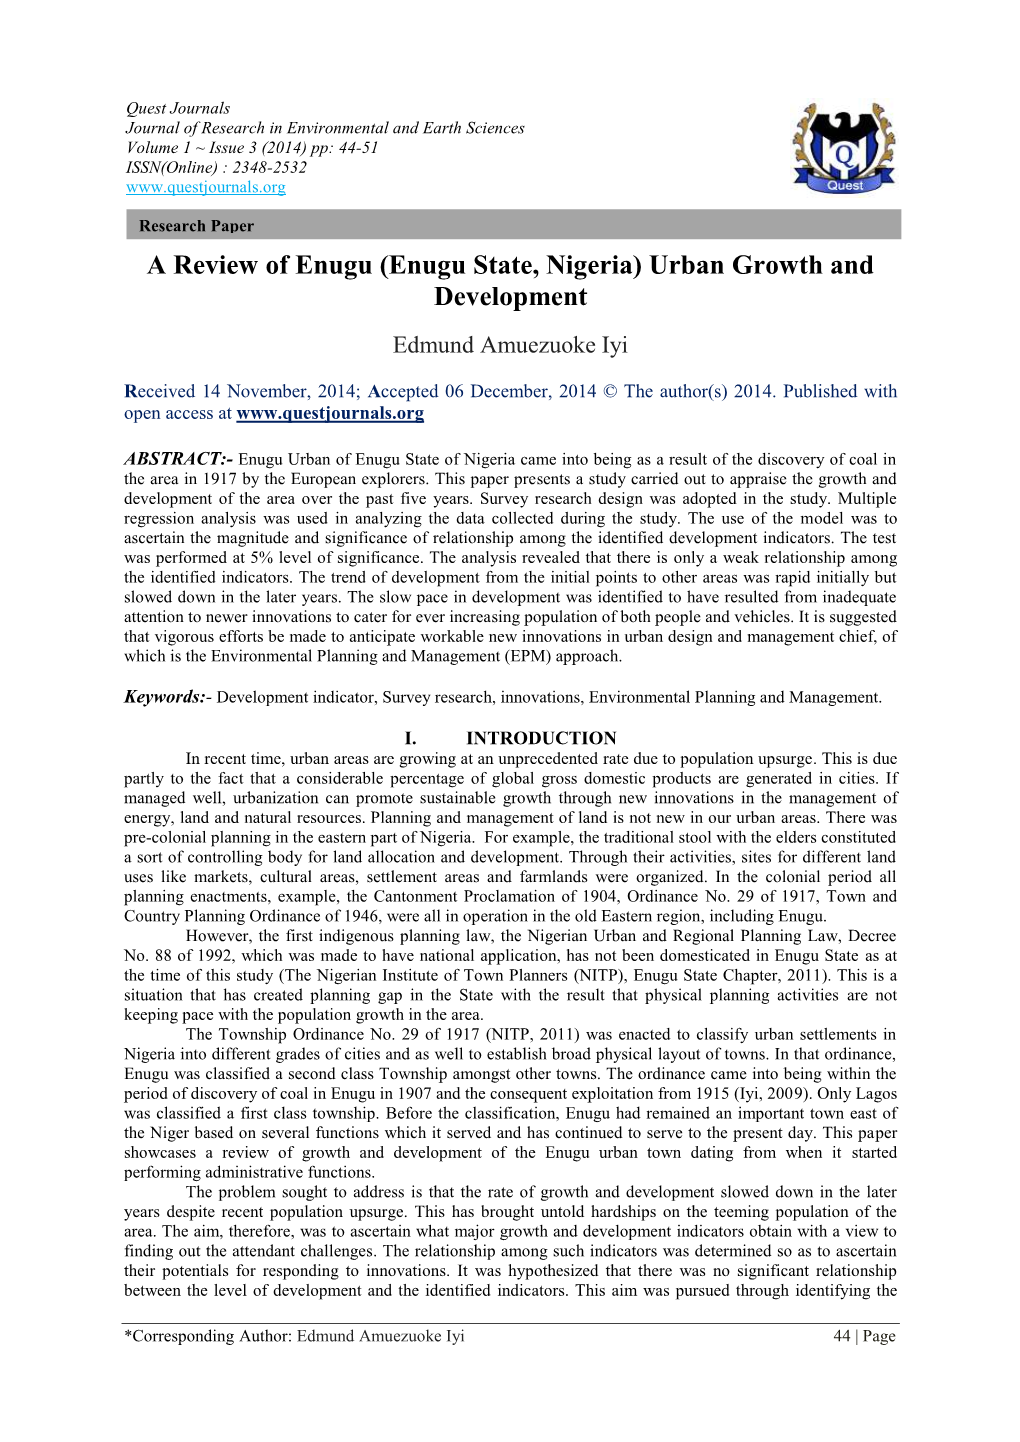 Enugu State, Nigeria) Urban Growth and Development